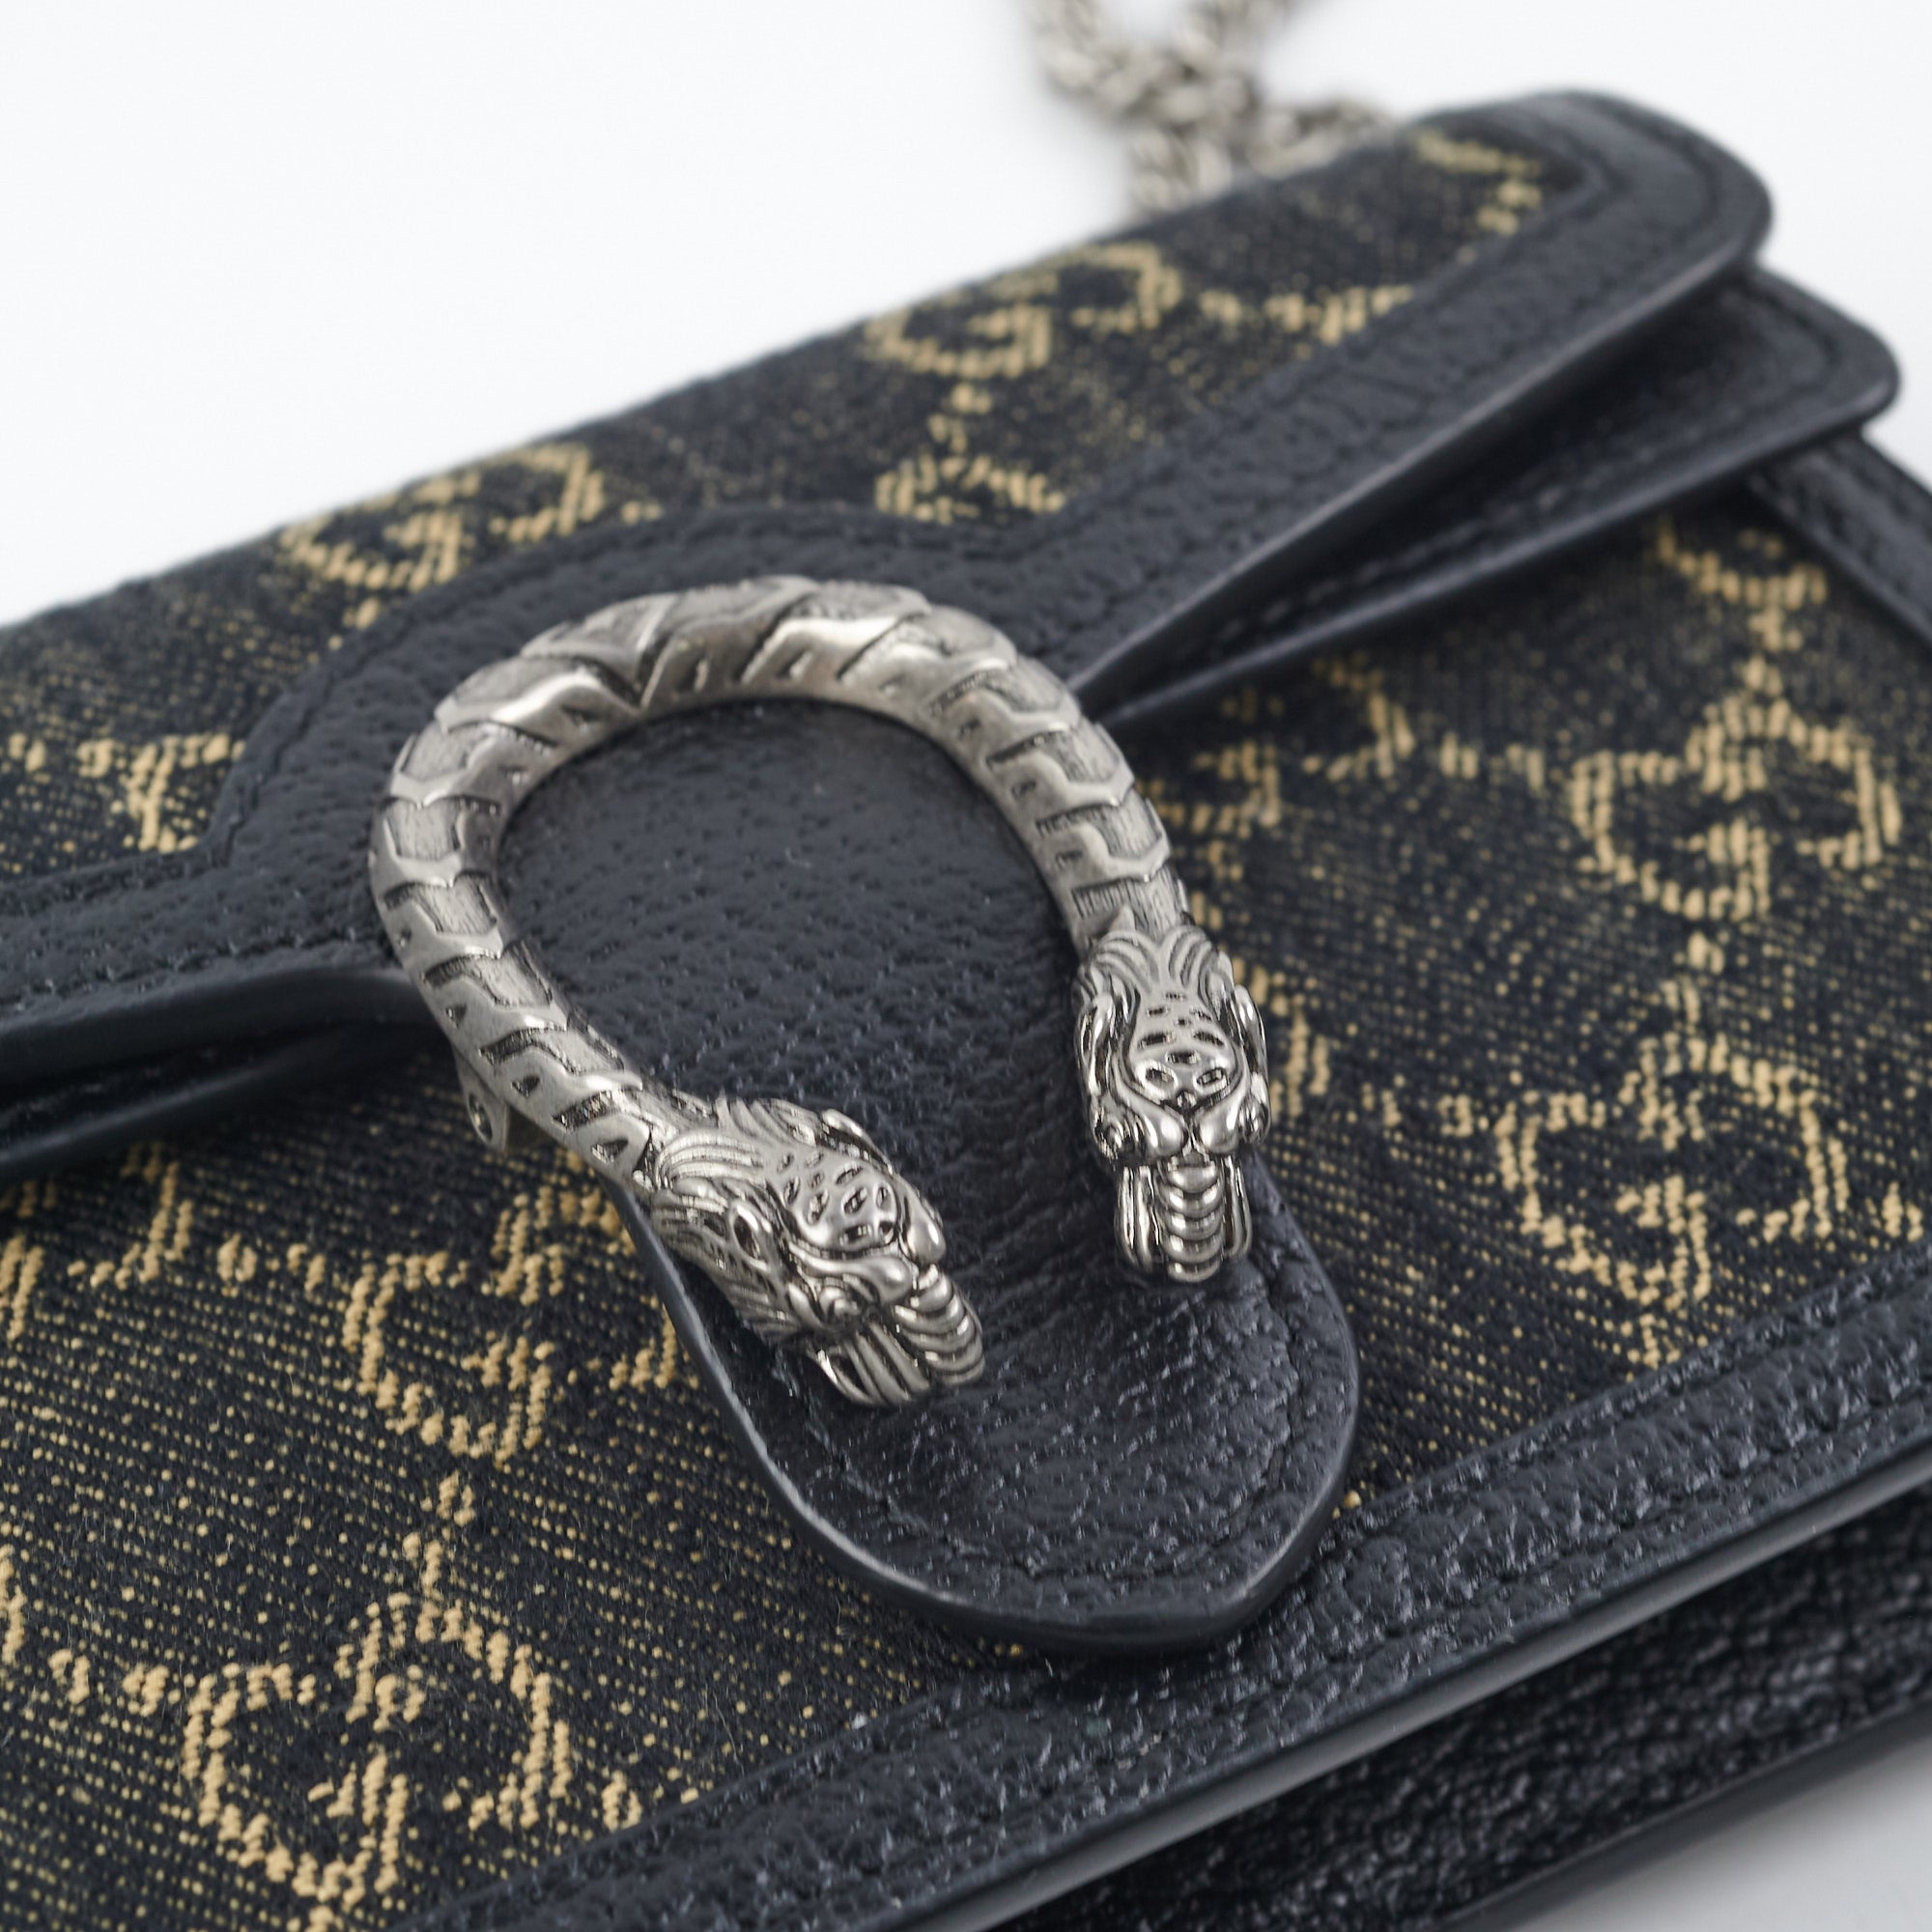 Gucci Dionysus GG Small Shoulder Bag - THE PURSE AFFAIR